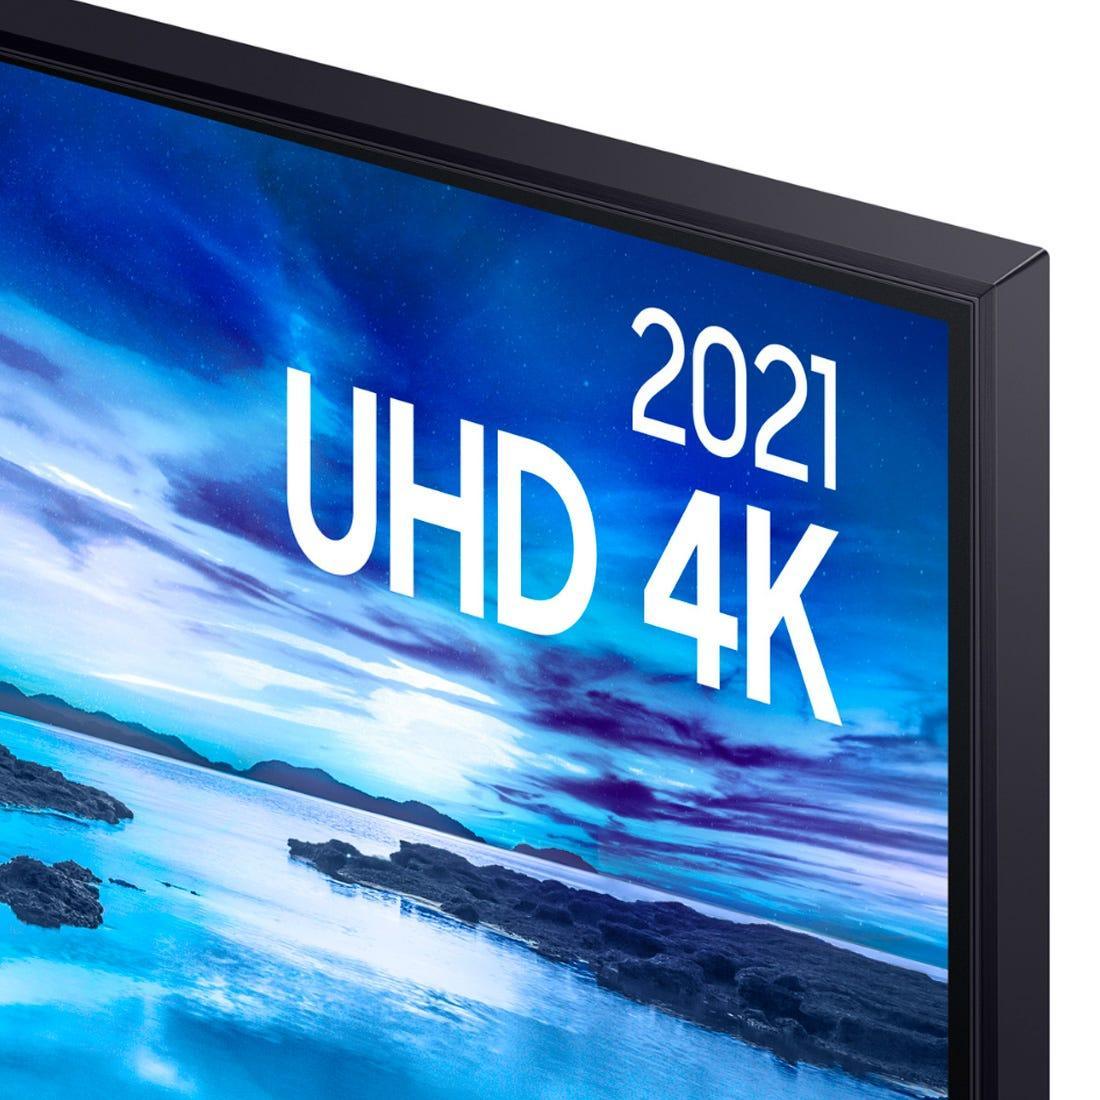 Smart TV Samsung LED 4K 60" - UN60AU7700GXZD - Mega Market